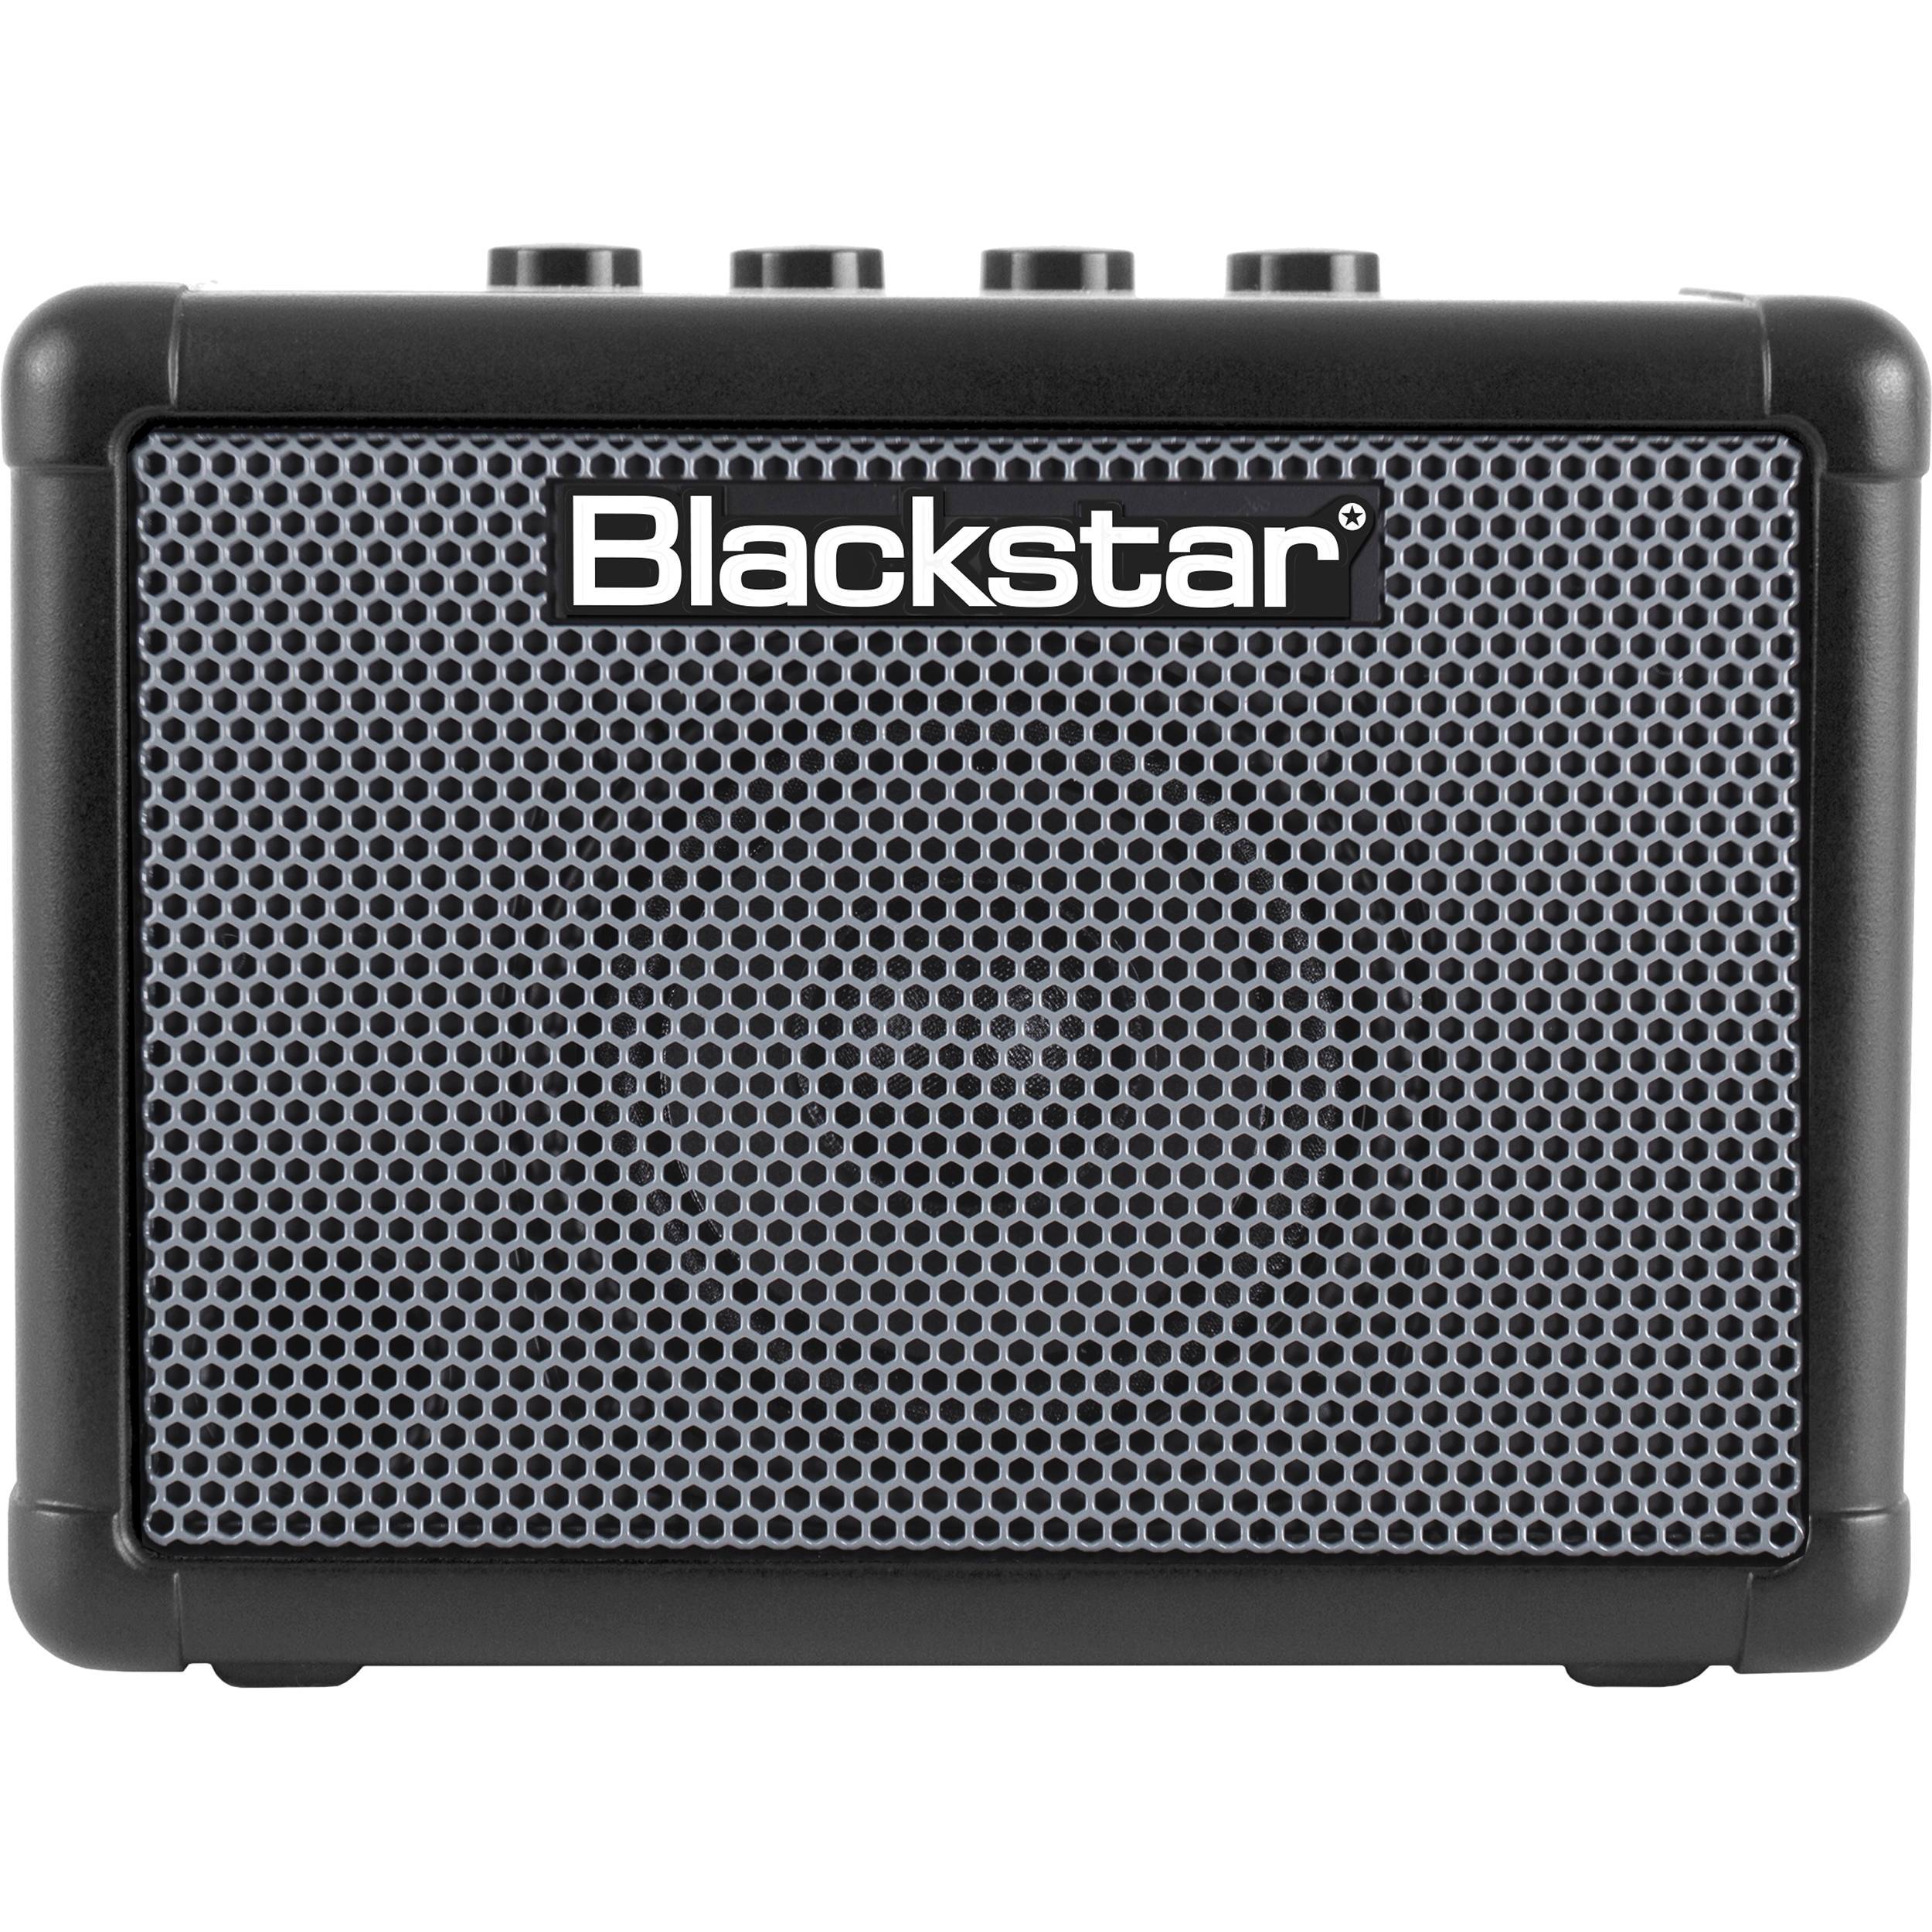 Blackstar FLY 3 BASS Mini Amplificador de Bajo Amplificadores de Bajo Blackstar 